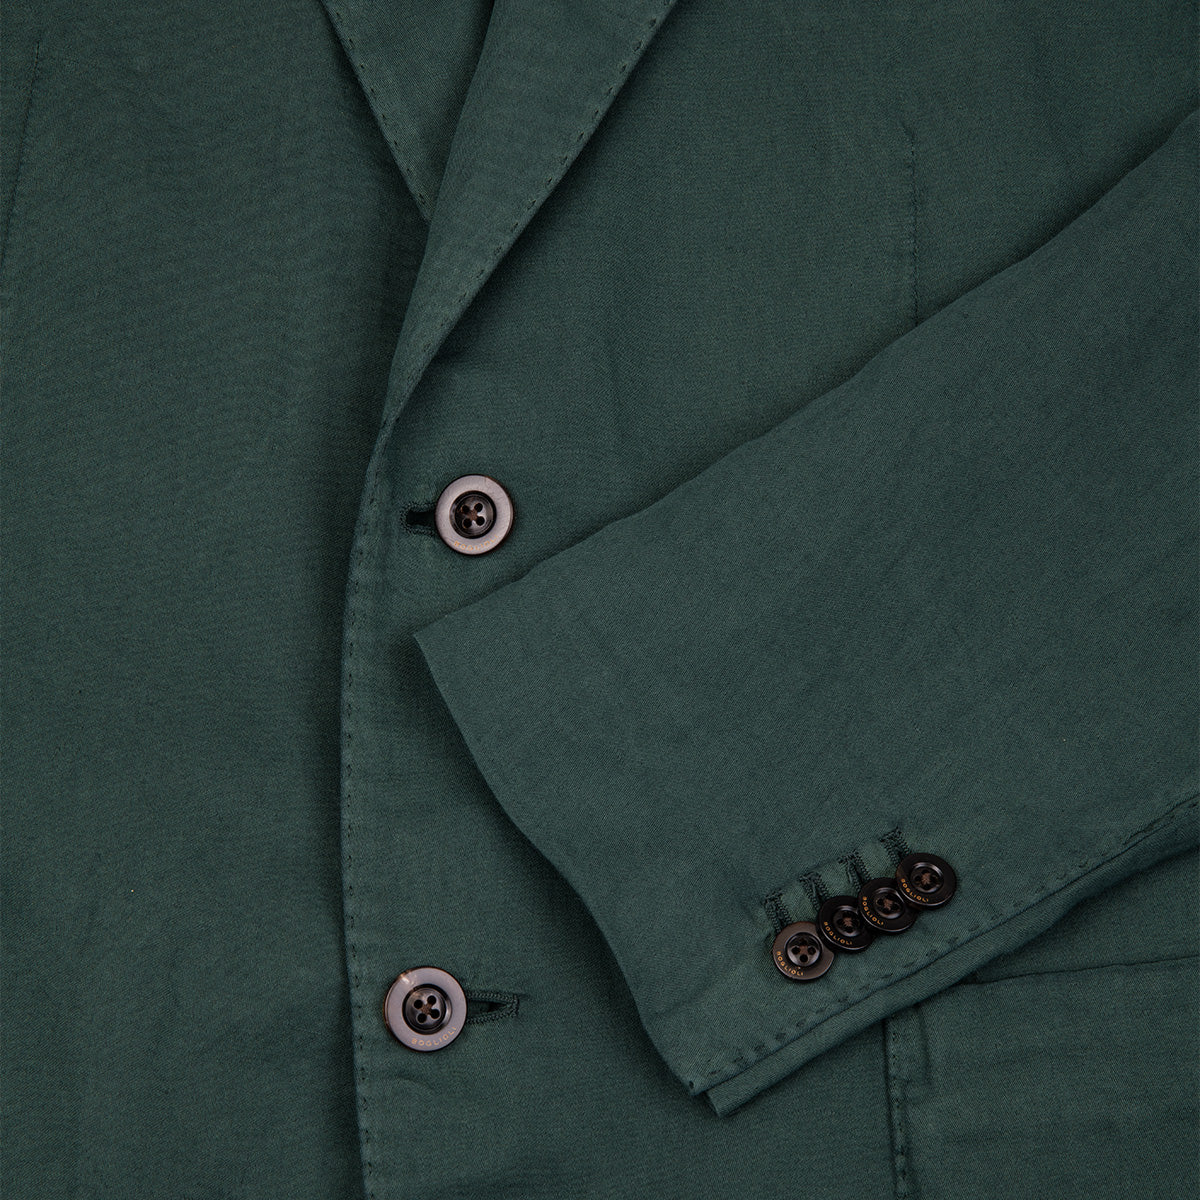 Green Peak Lapel Cotton Linen Sports Jacket - Green